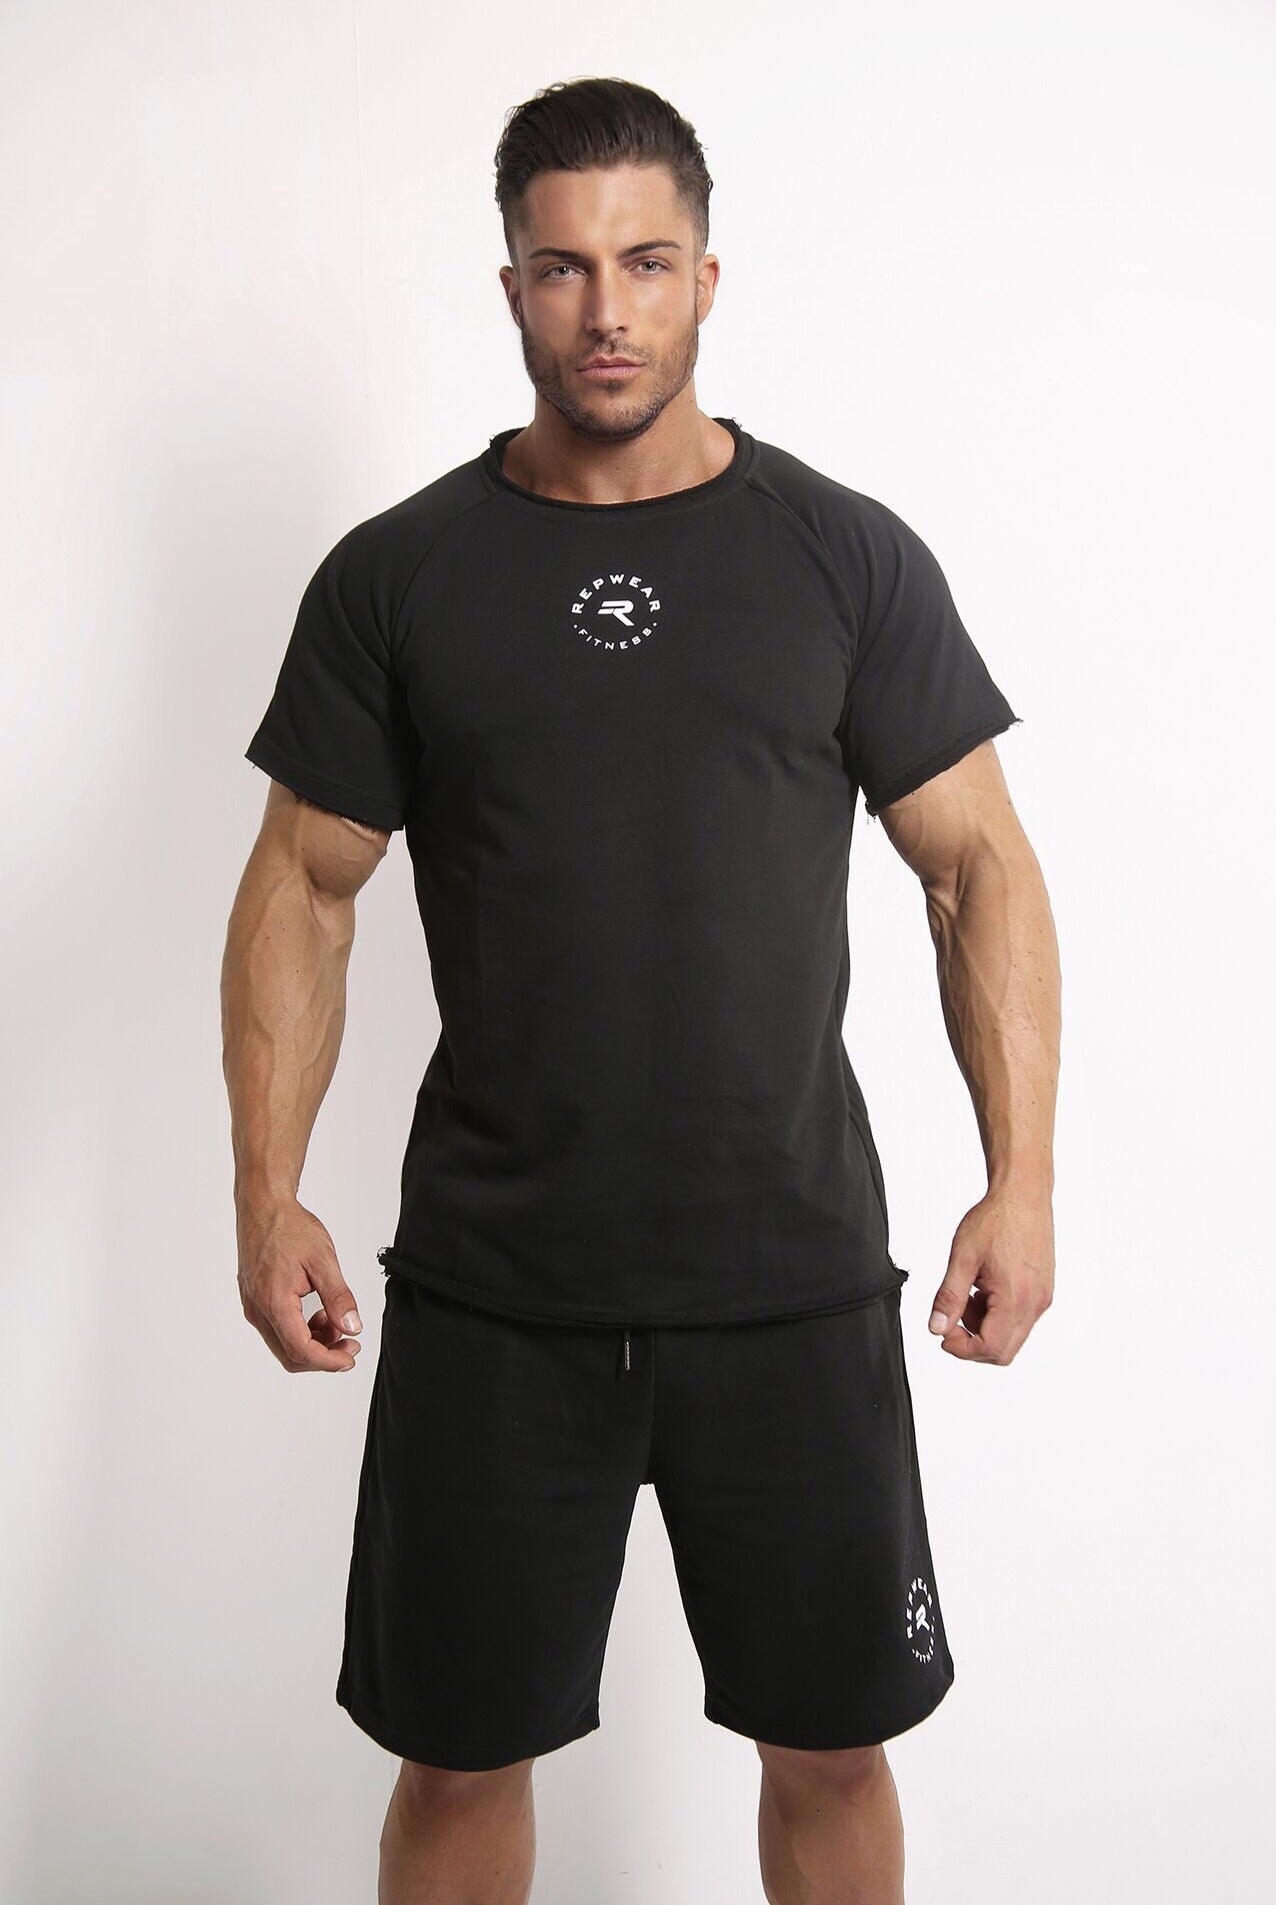 Repwear Fitness Onyx Rag Top Black